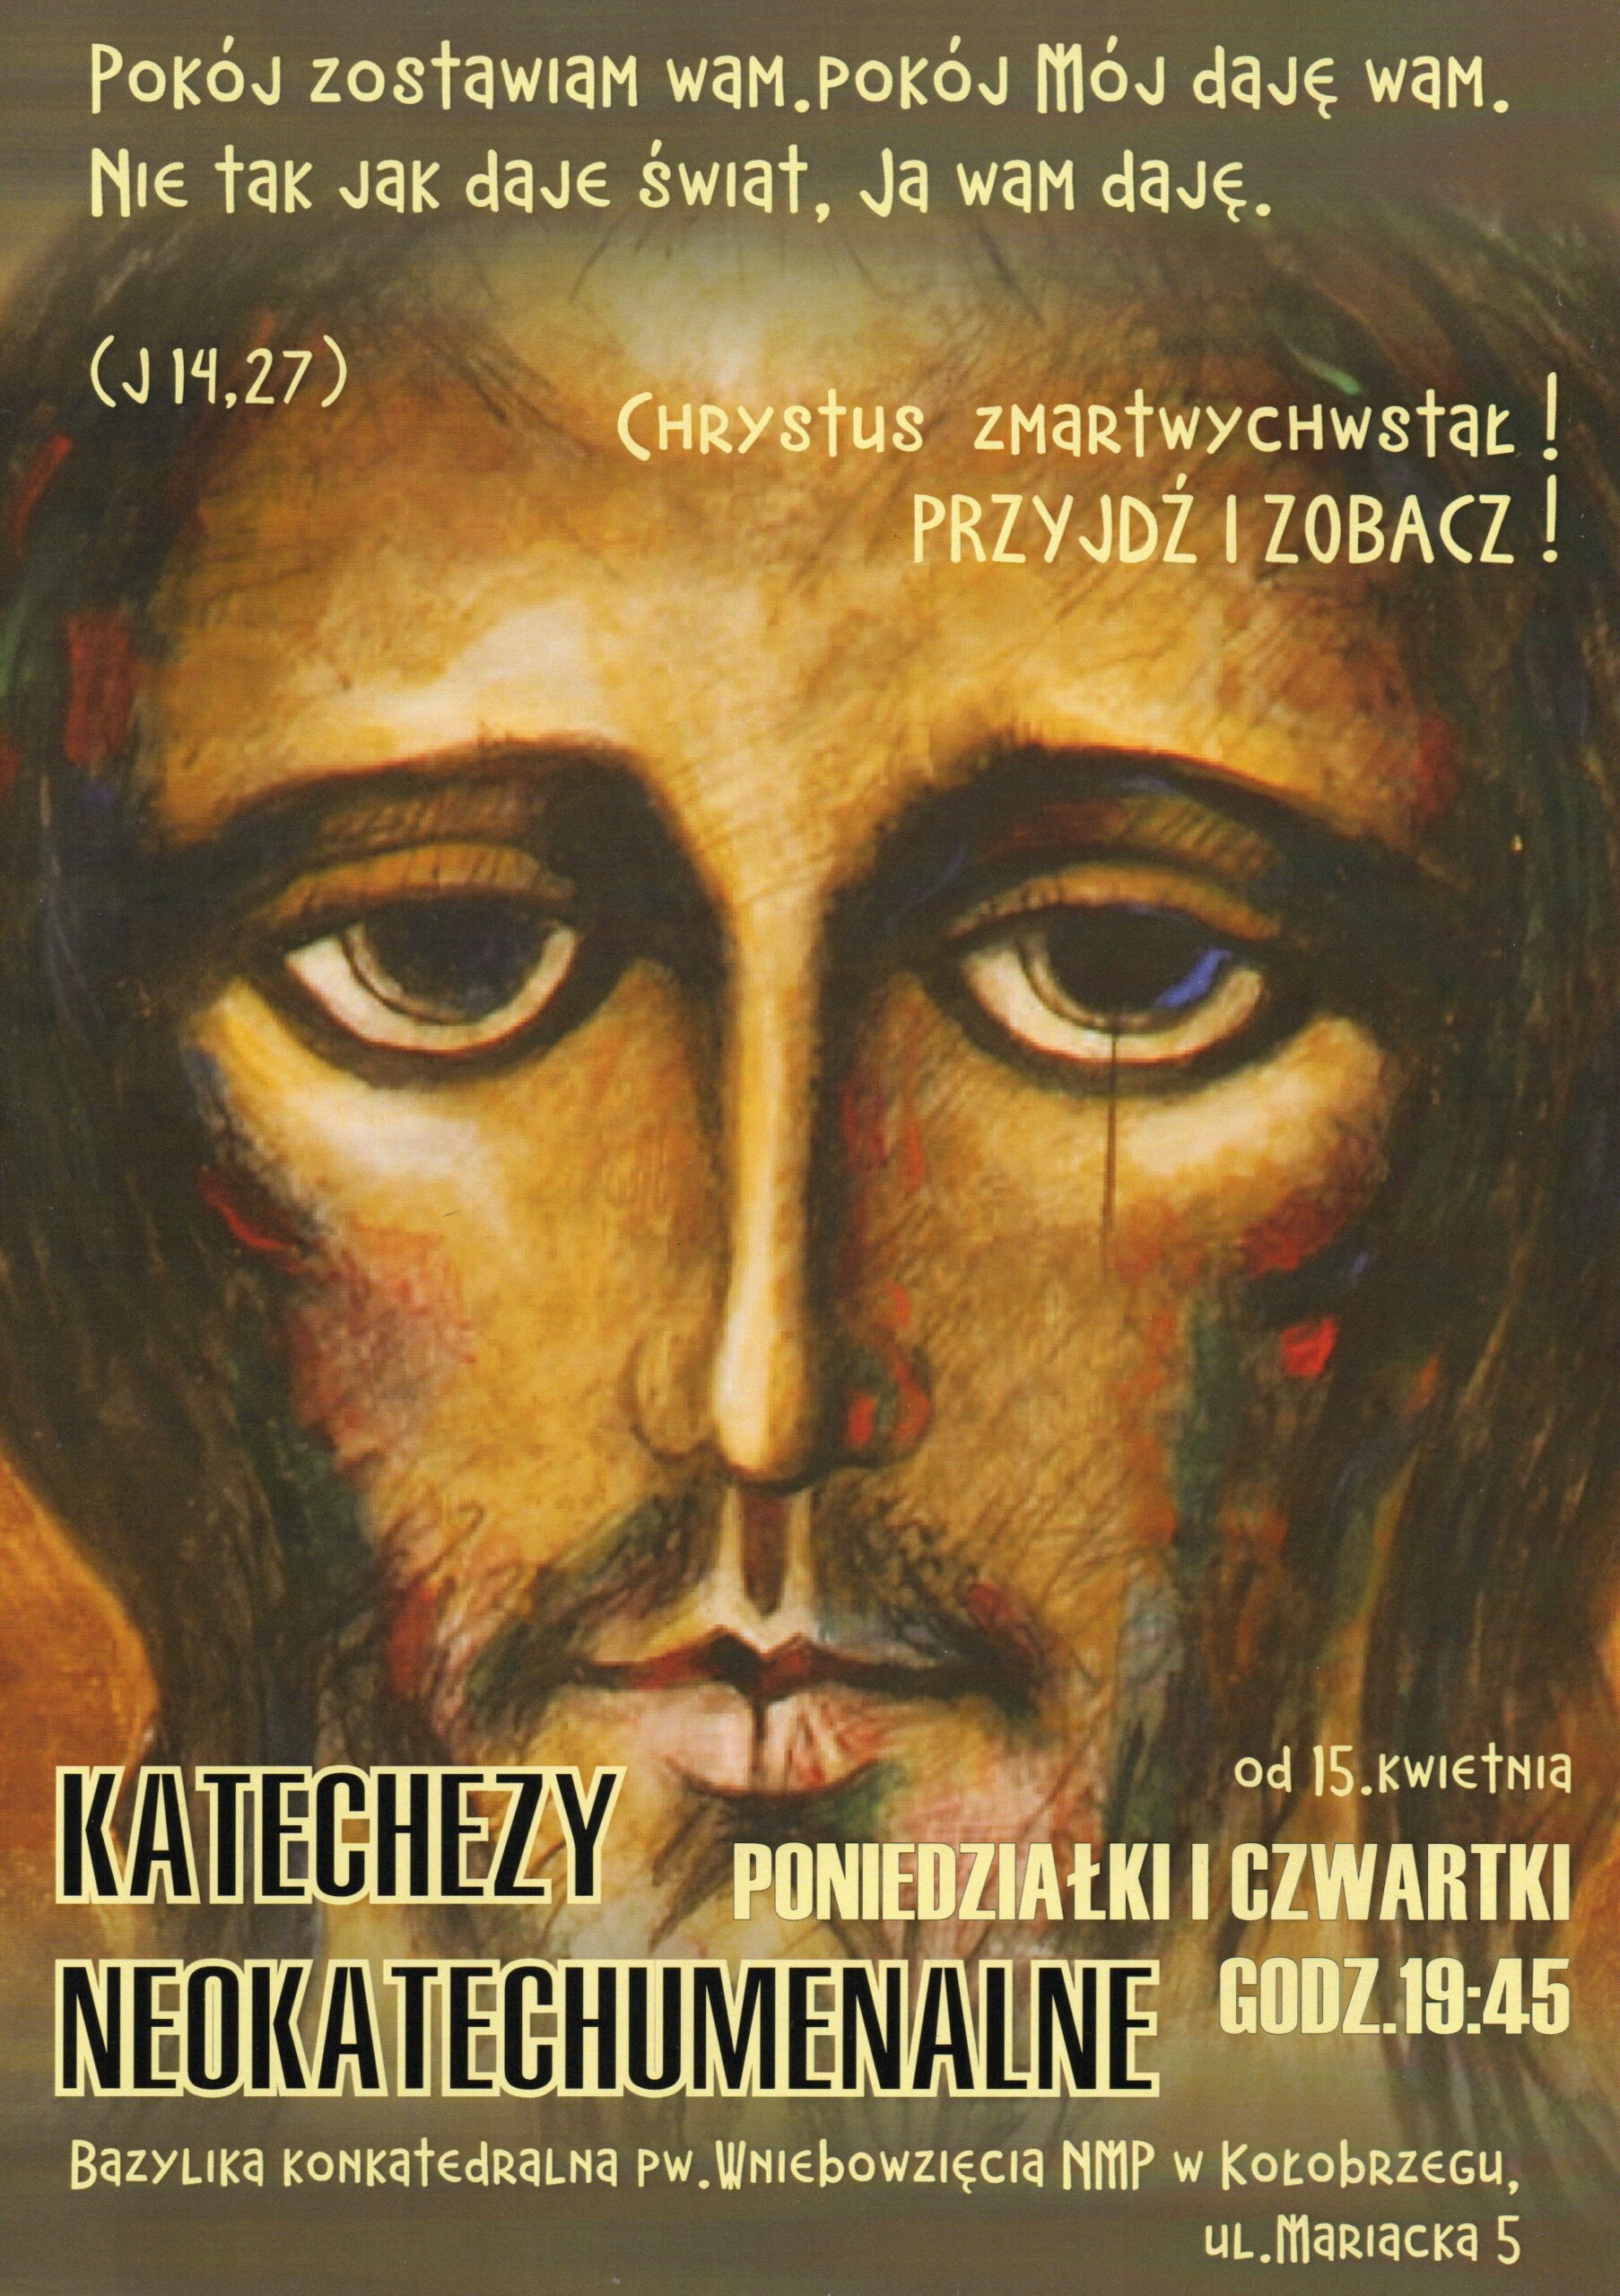 Read more about the article Zaproszenie na katechezy neokatechumenalne